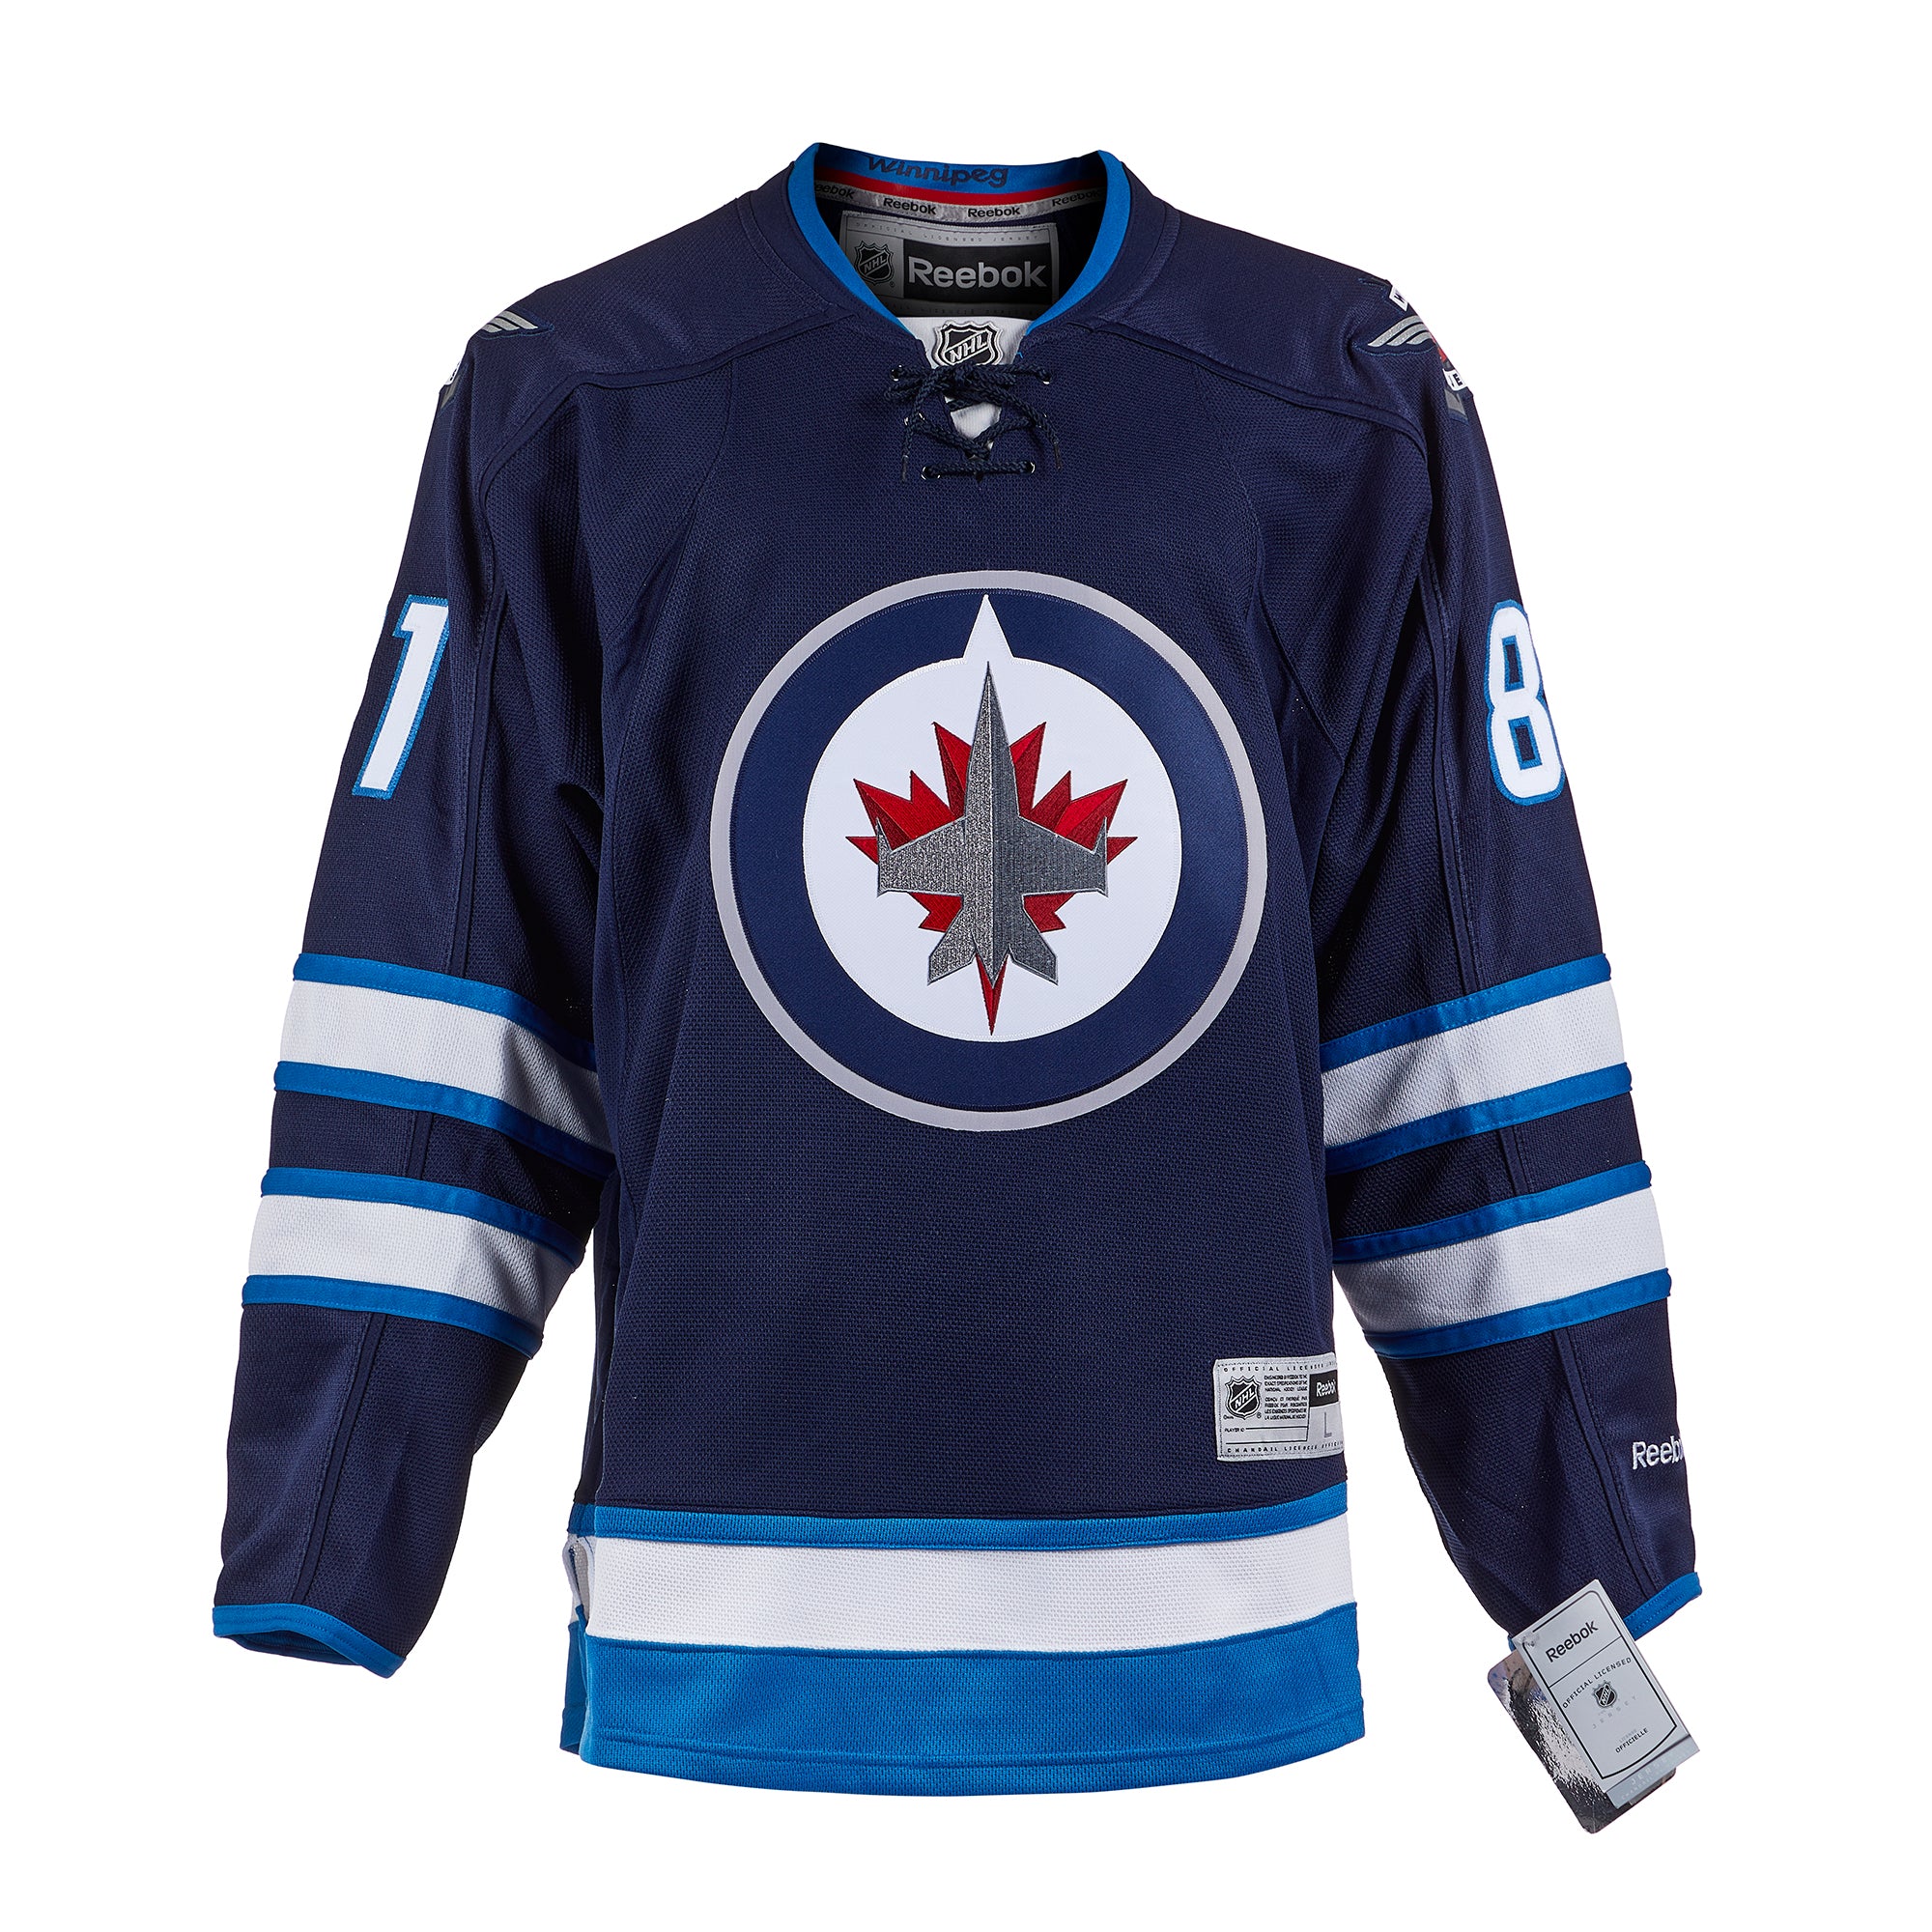 Official Reebok Winnipeg Jets Jersey - Size XL, Hockey